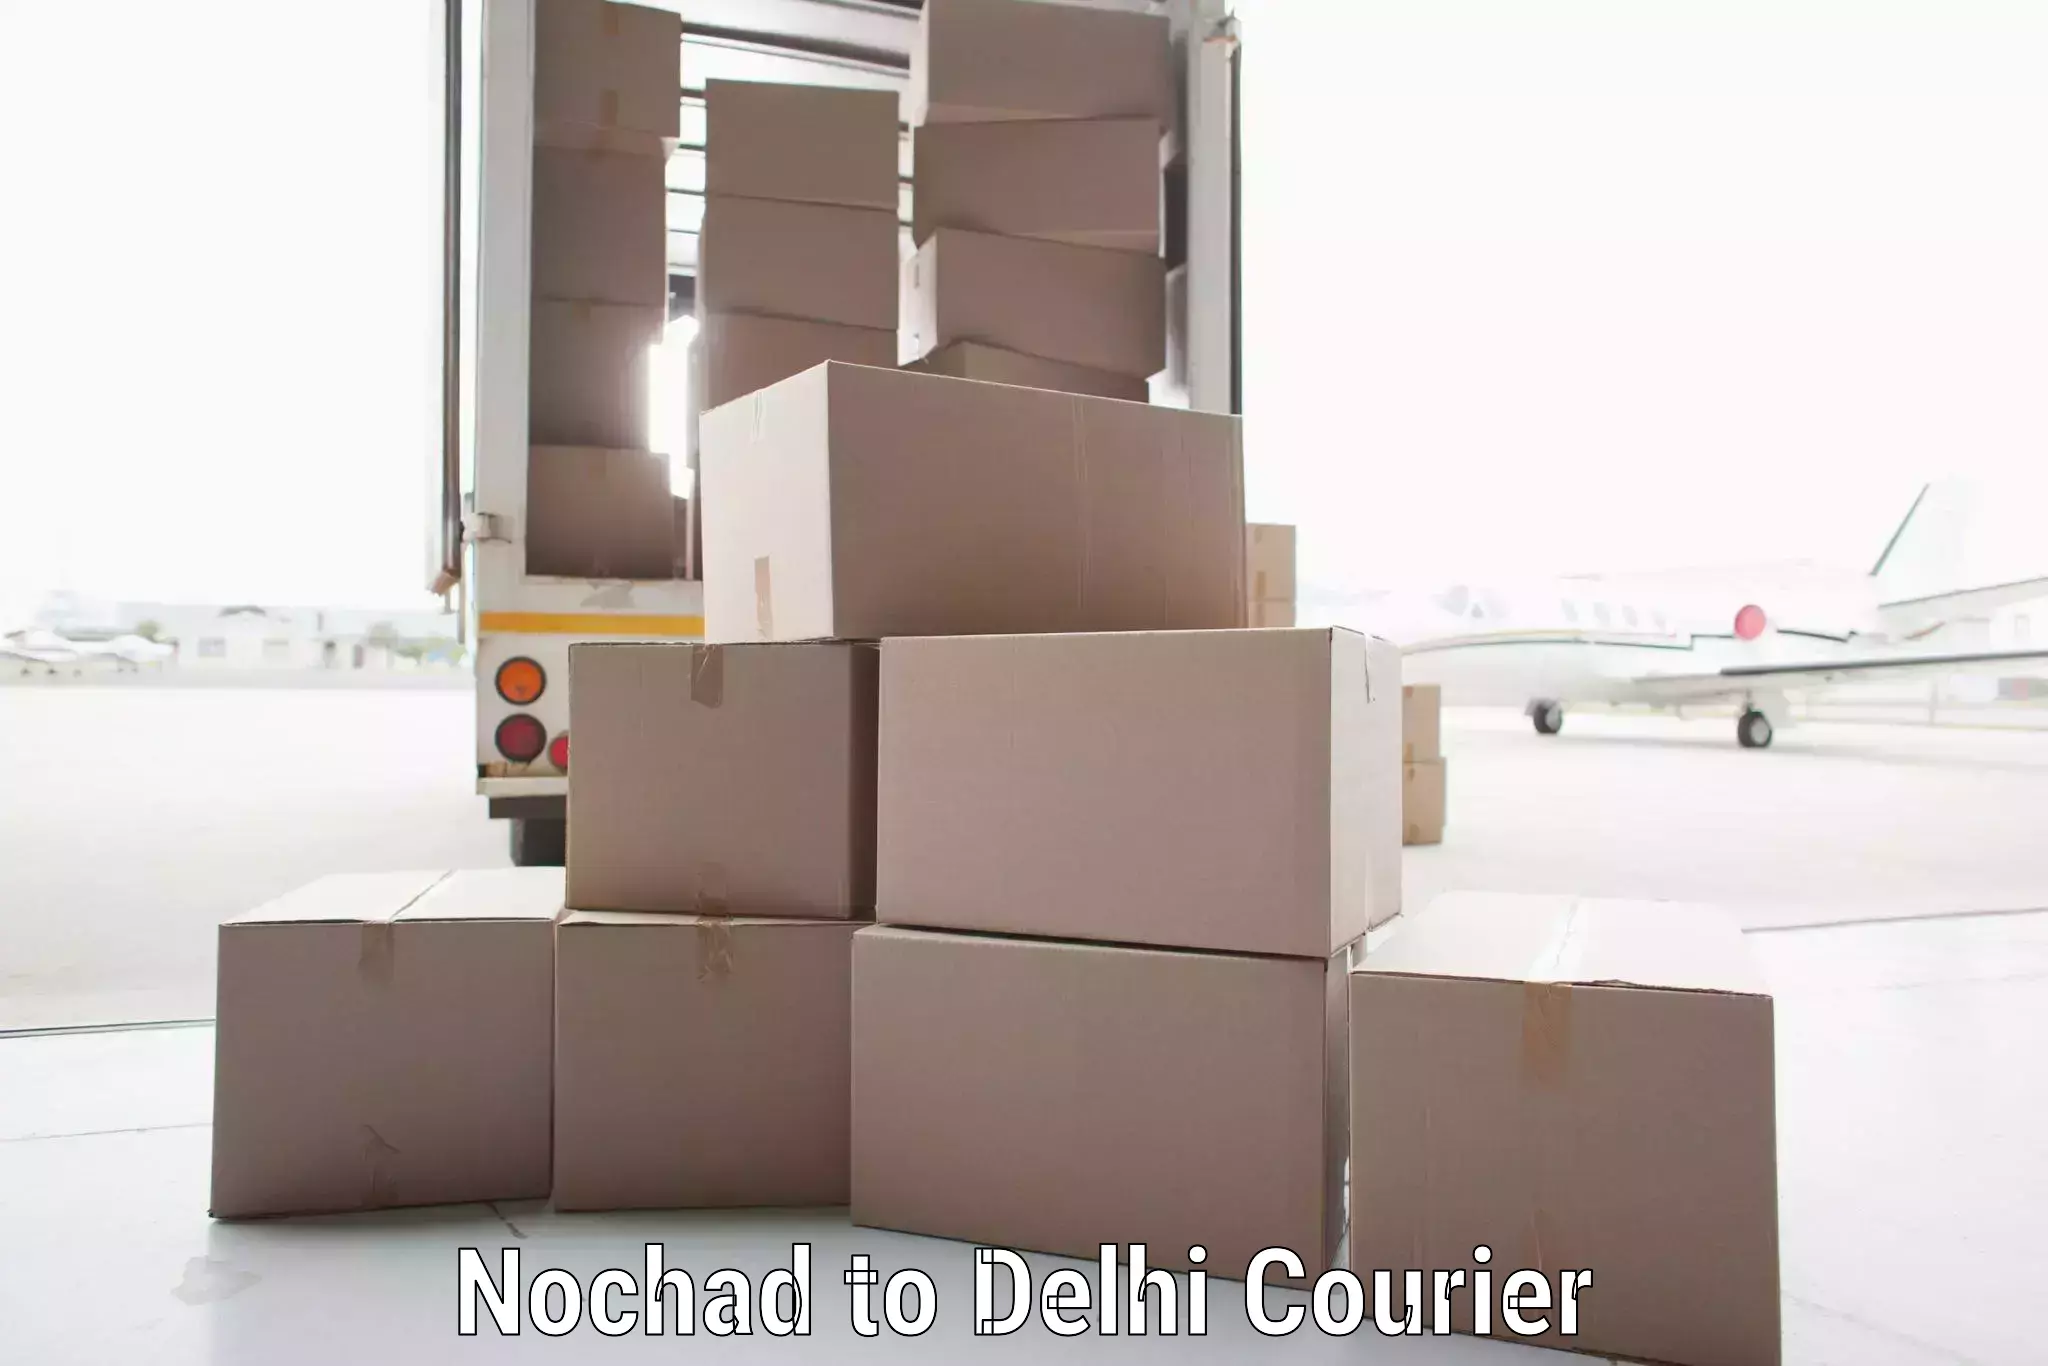 Global logistics network Nochad to University of Delhi